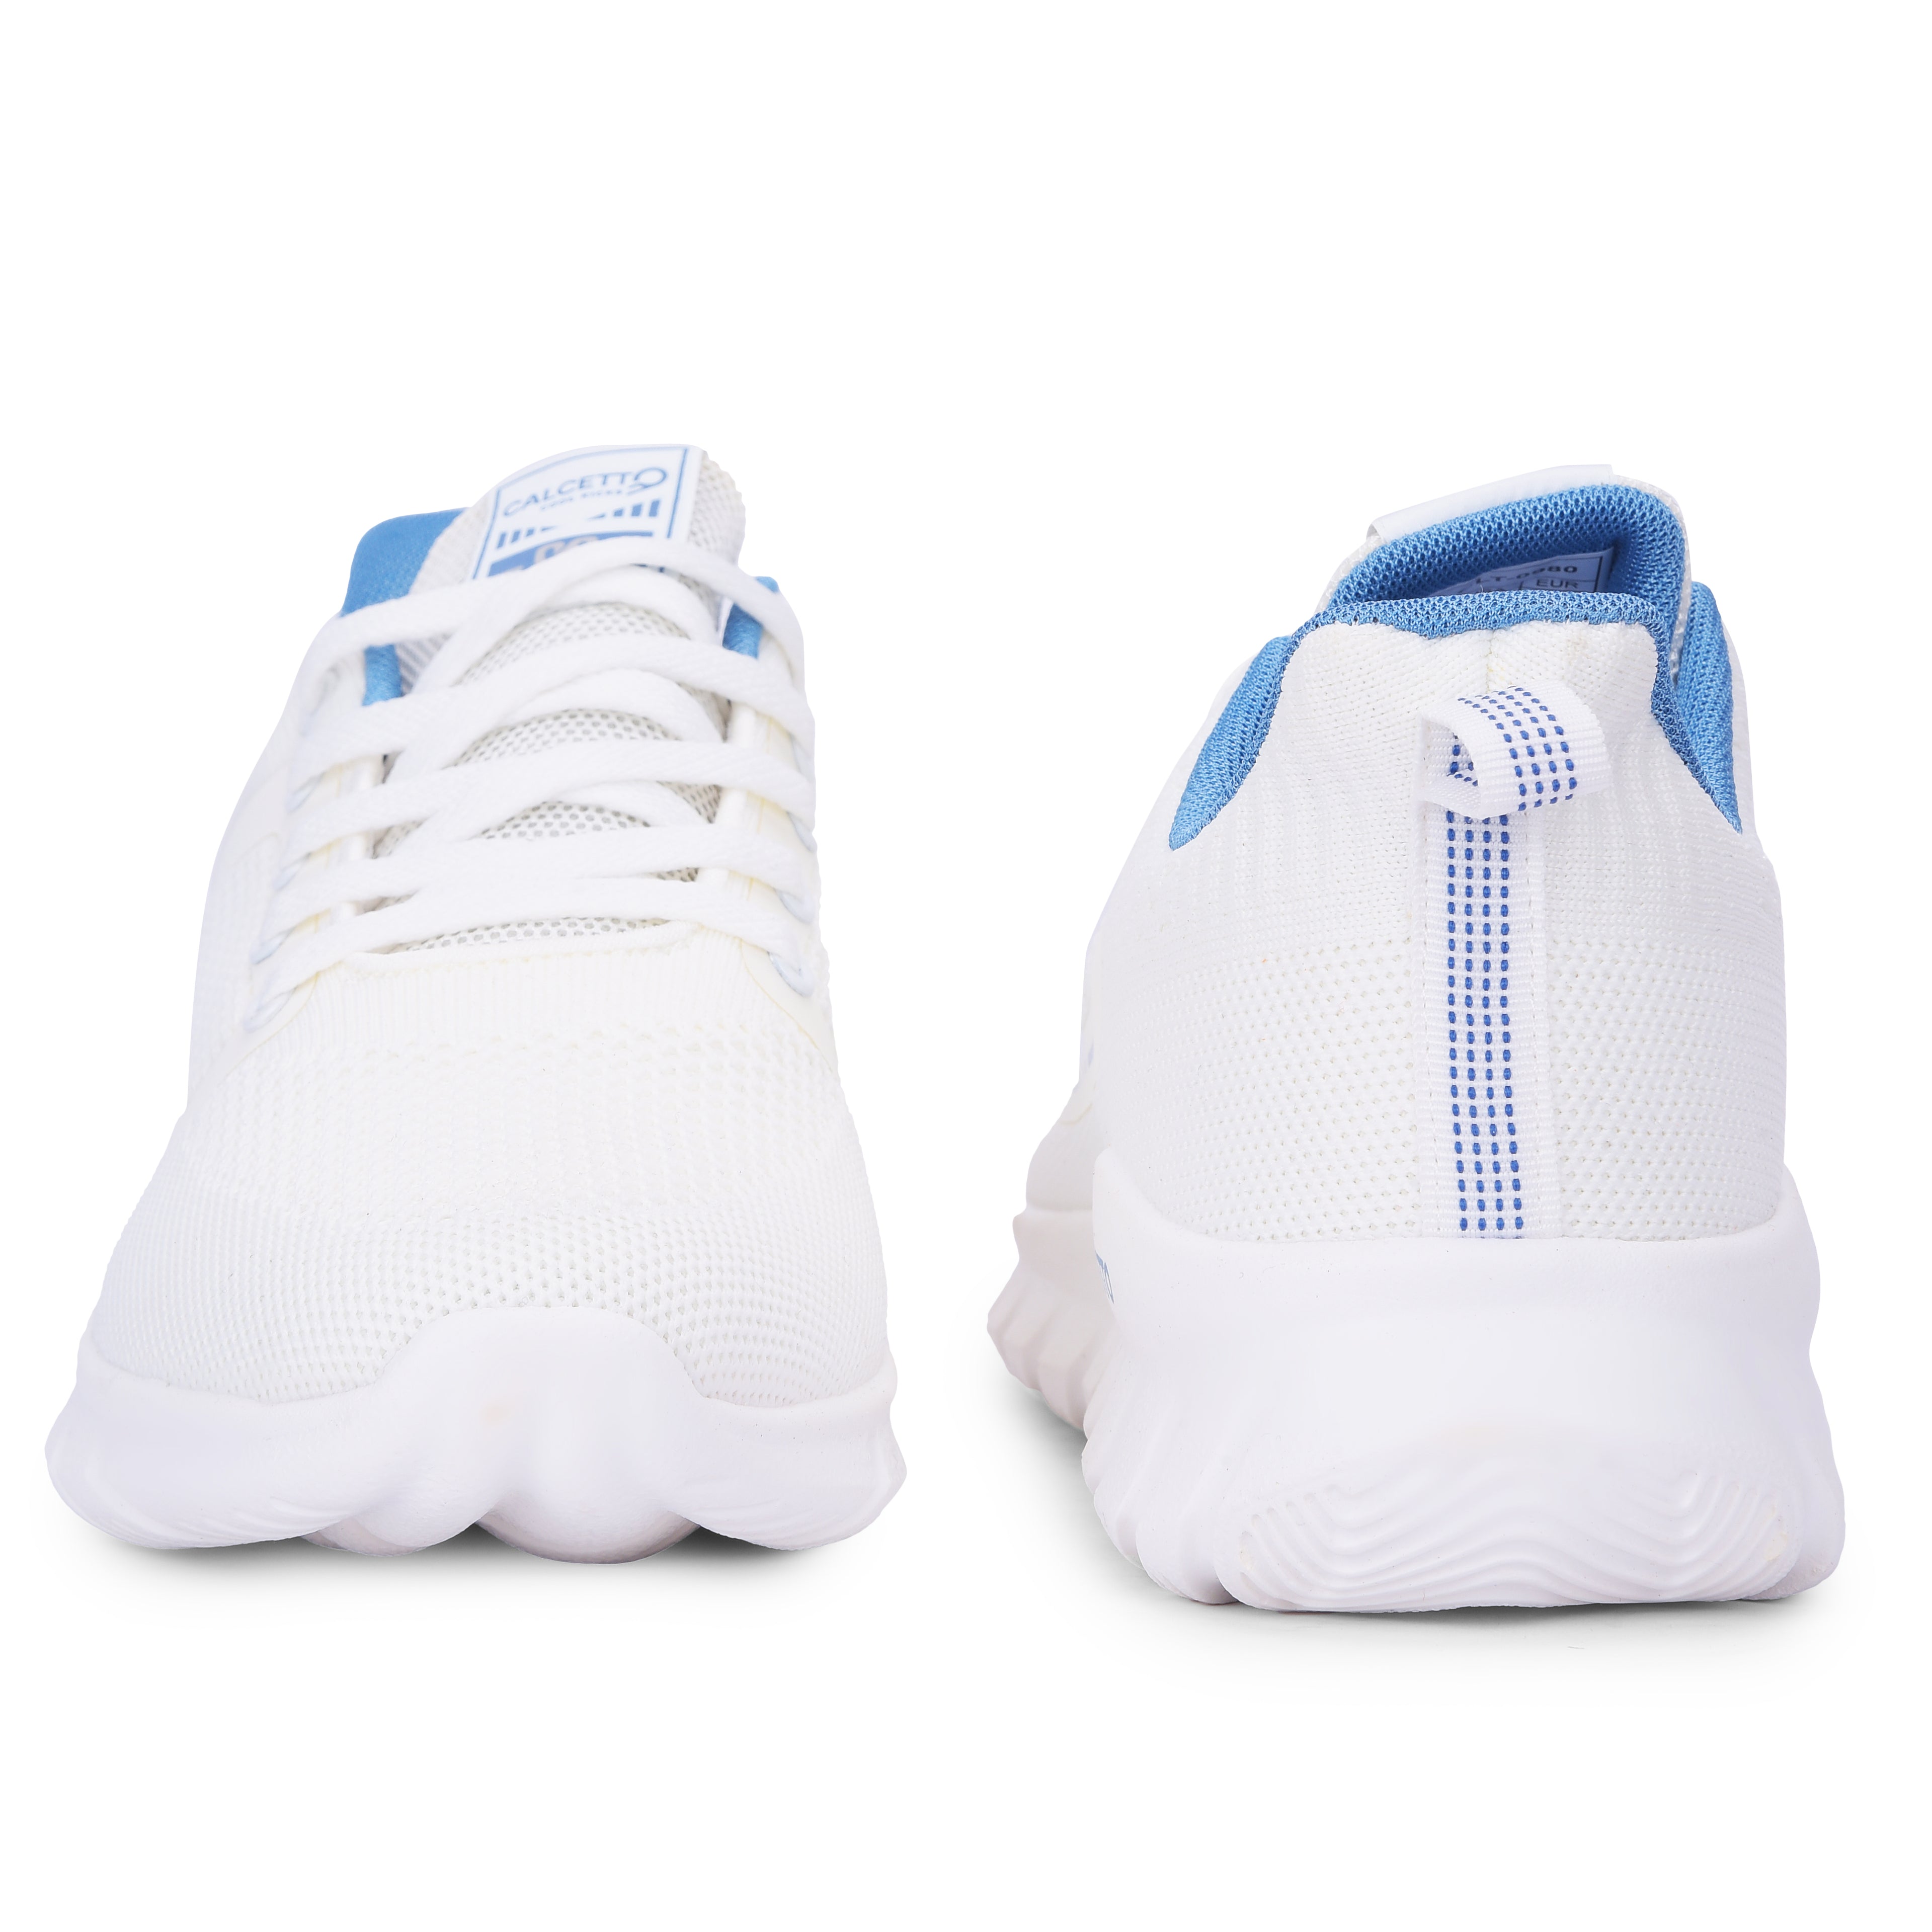 Calcetto CLT-0980 White Blue Men Casual Shoes